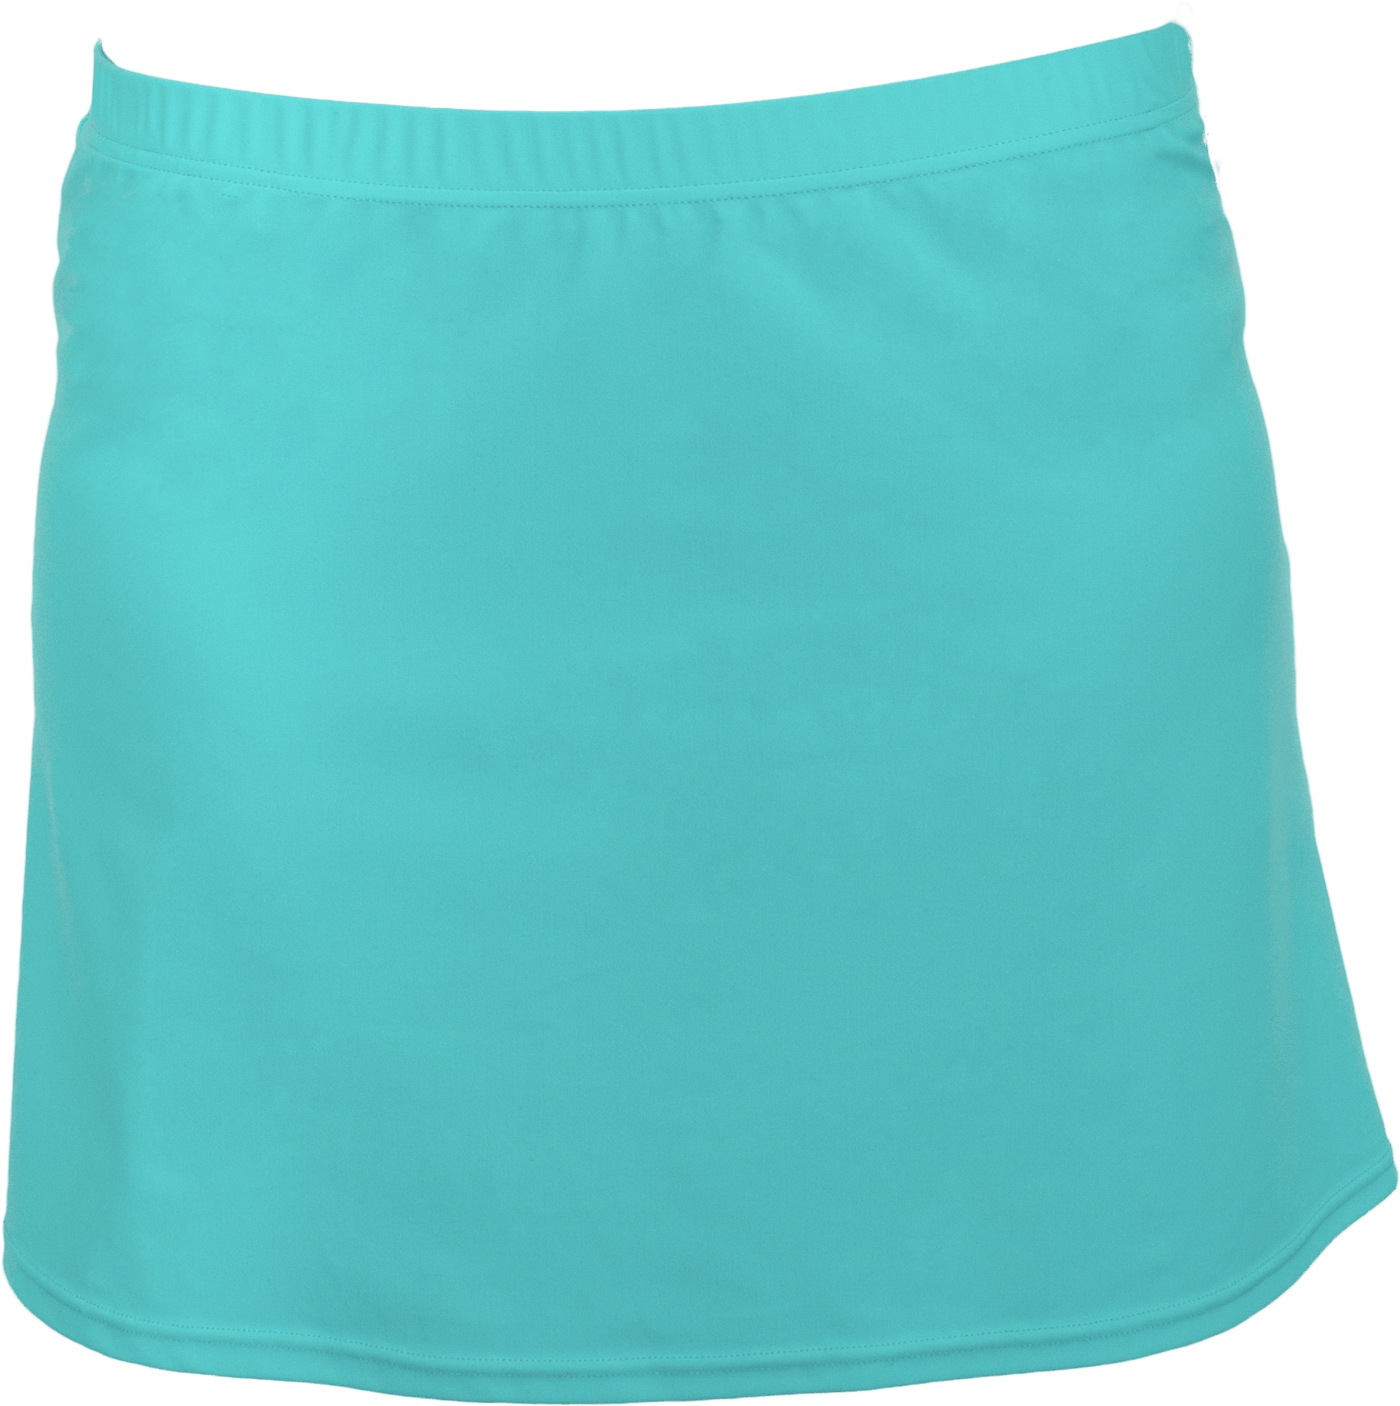 Tennis Skirt - Aqua - FINAL SALE - DM Fashion